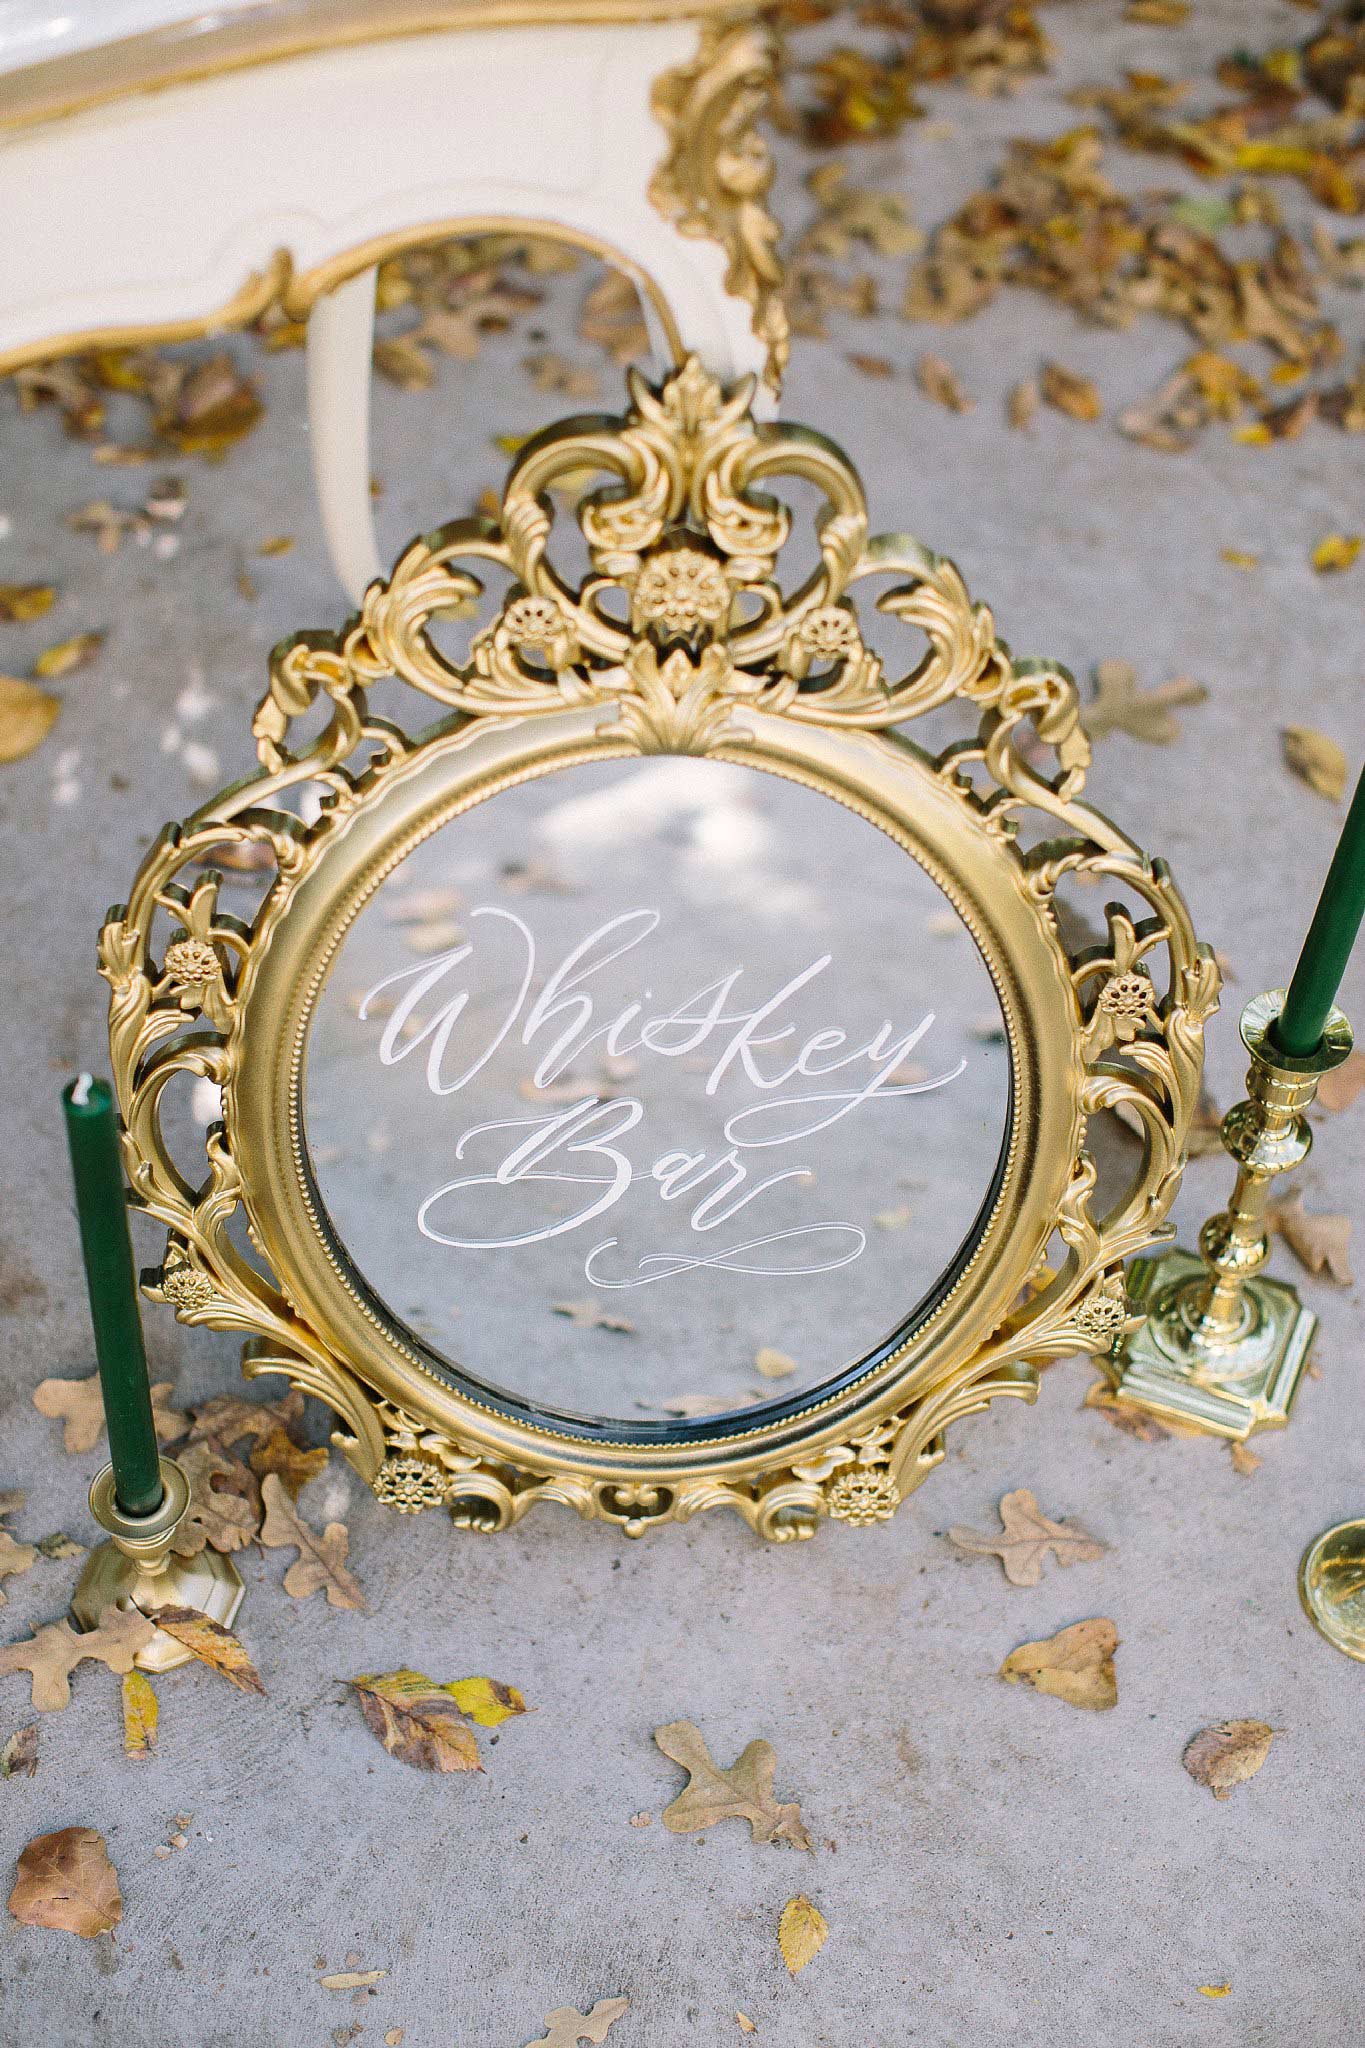 aristide mansfield wedding whiskey bar mirror sign